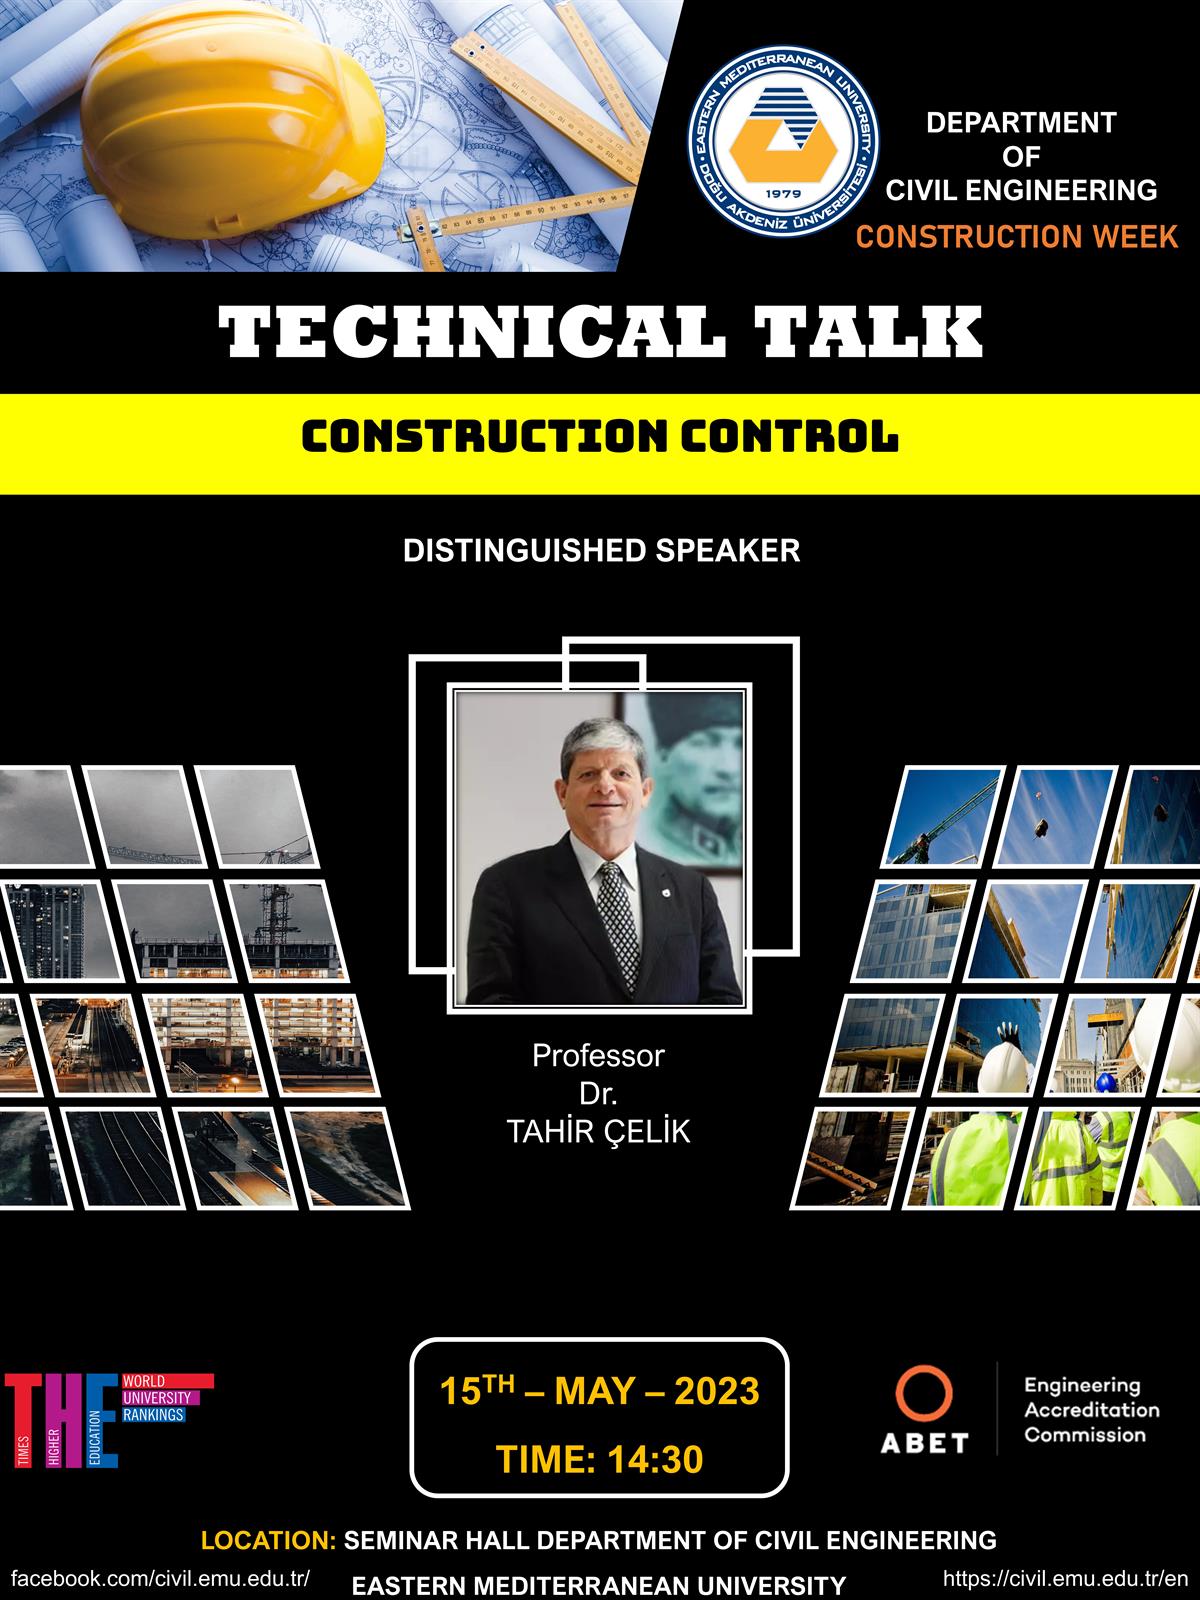 Technical Talk by Professor Dr. Tahir Celik